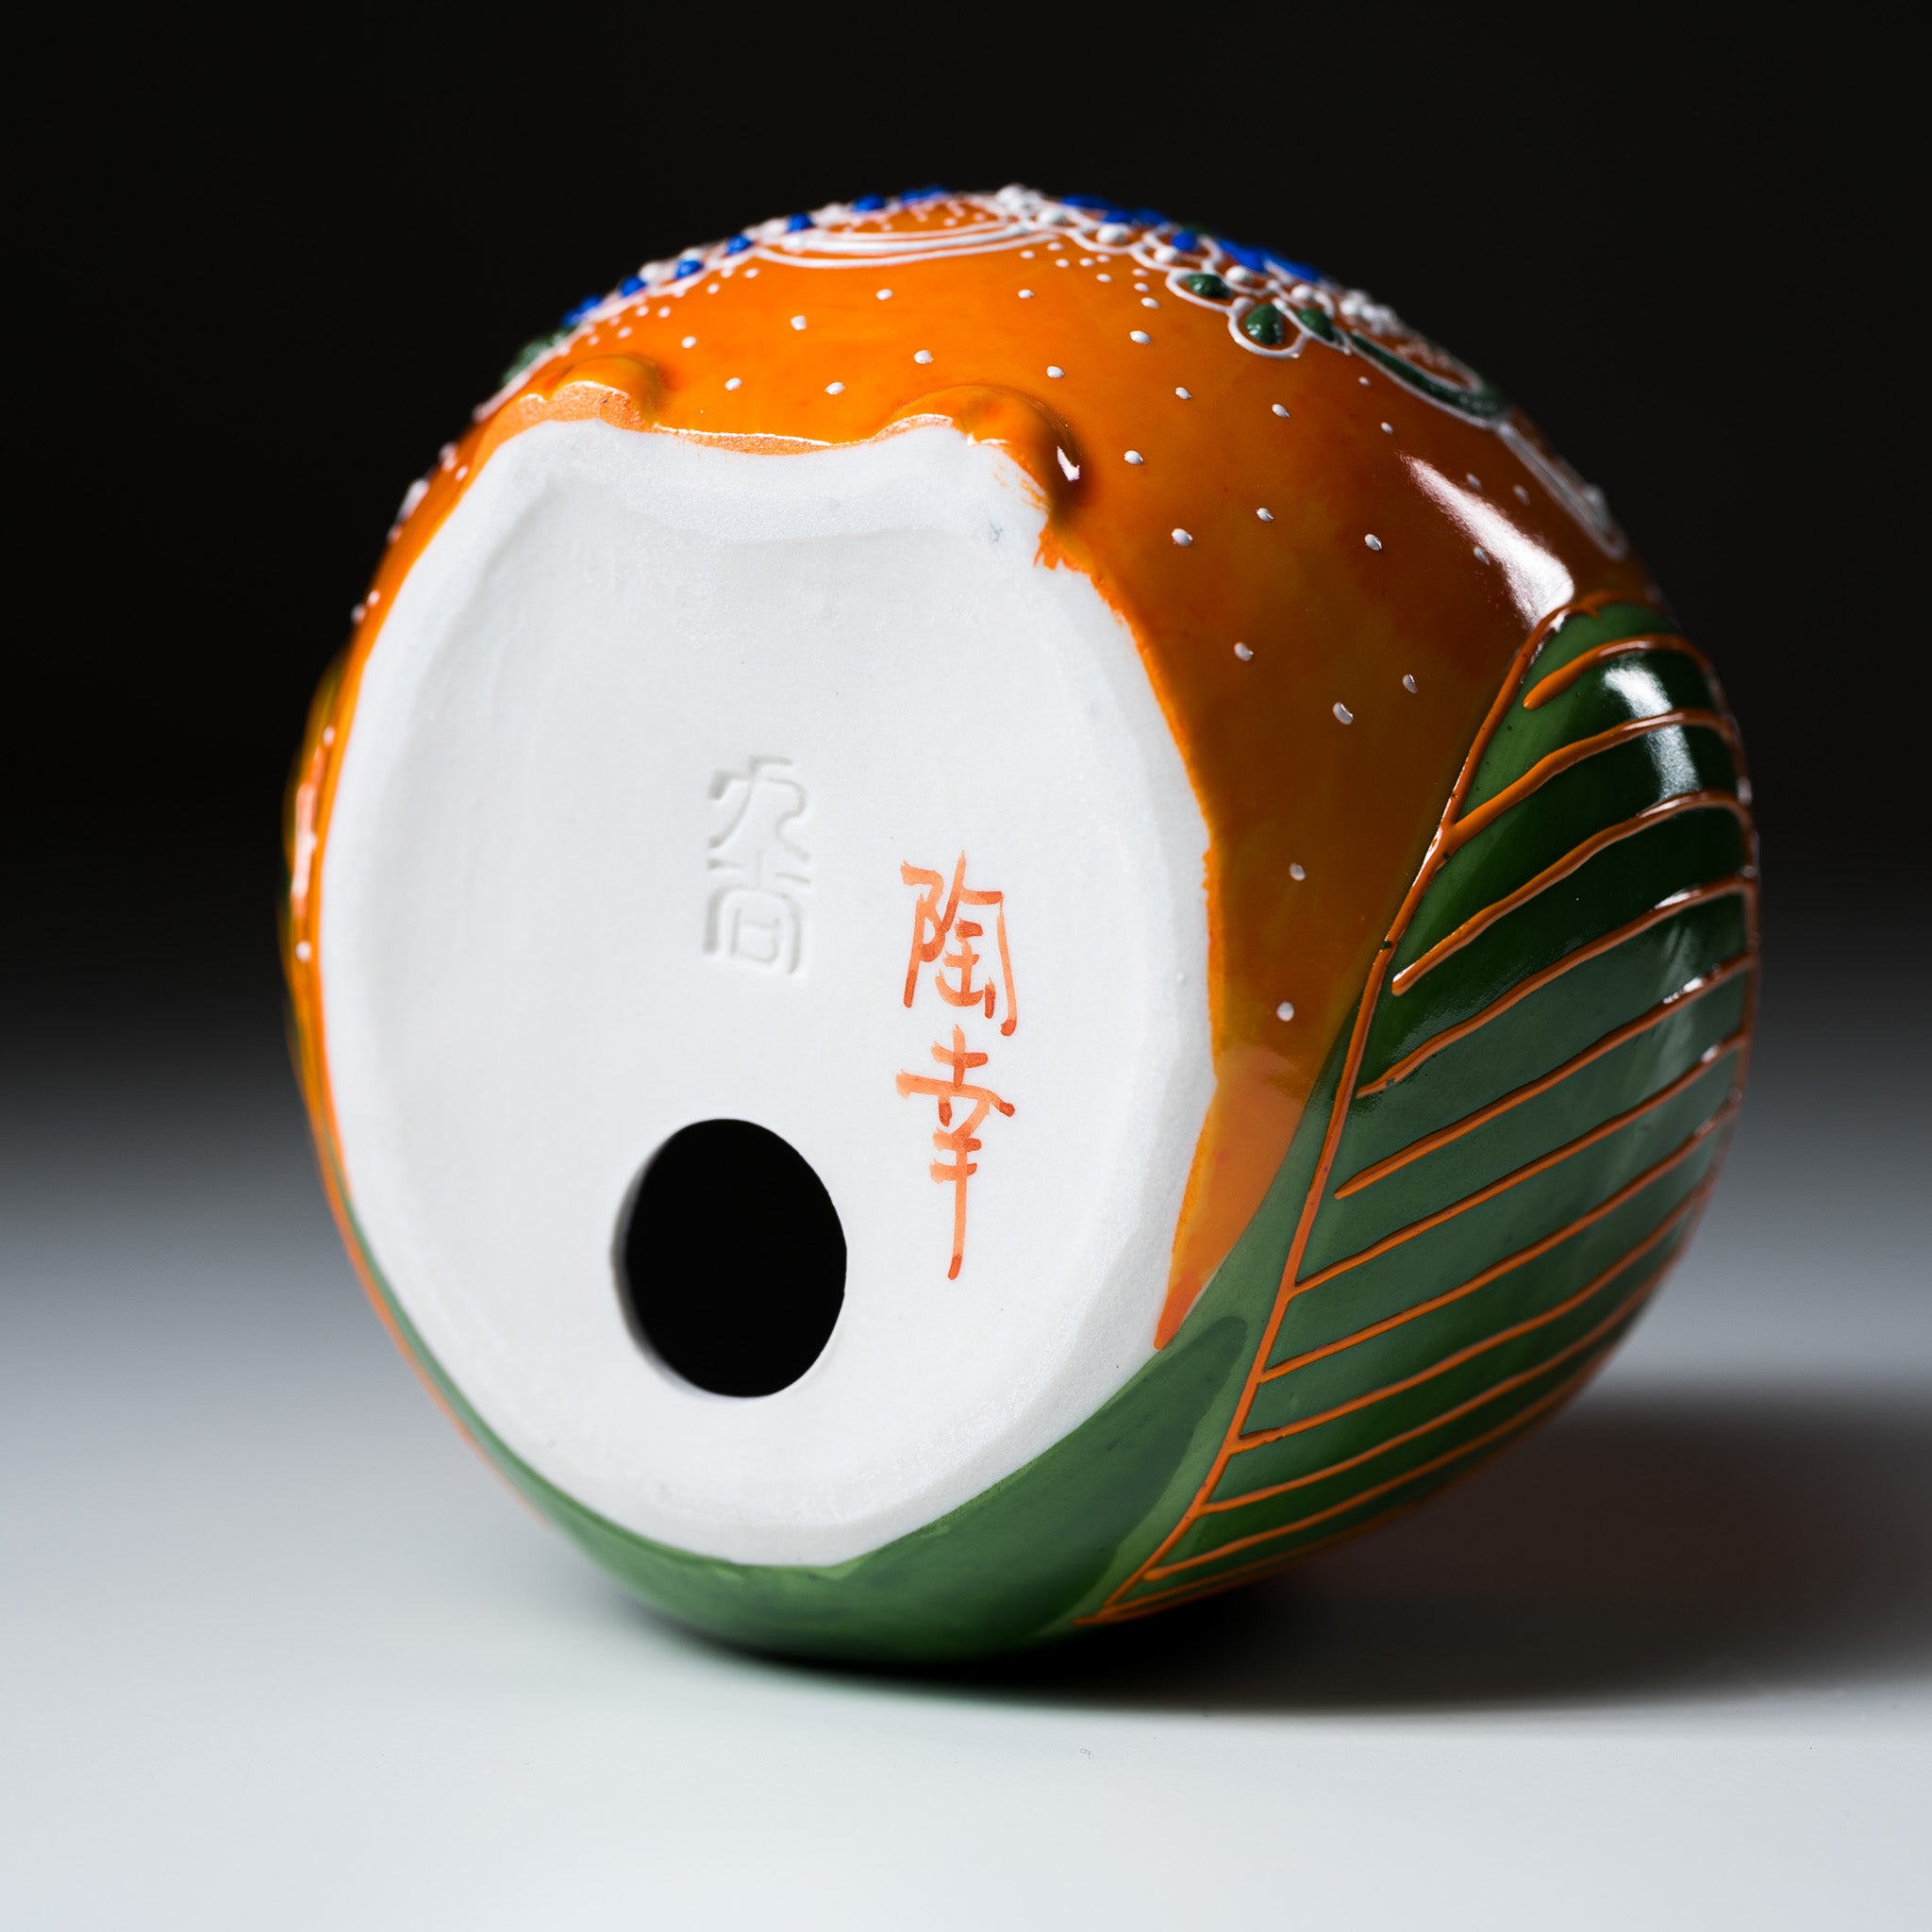 Kutani Ware Animal Ornament - Orange Owl / 九谷焼 オレンジ梟